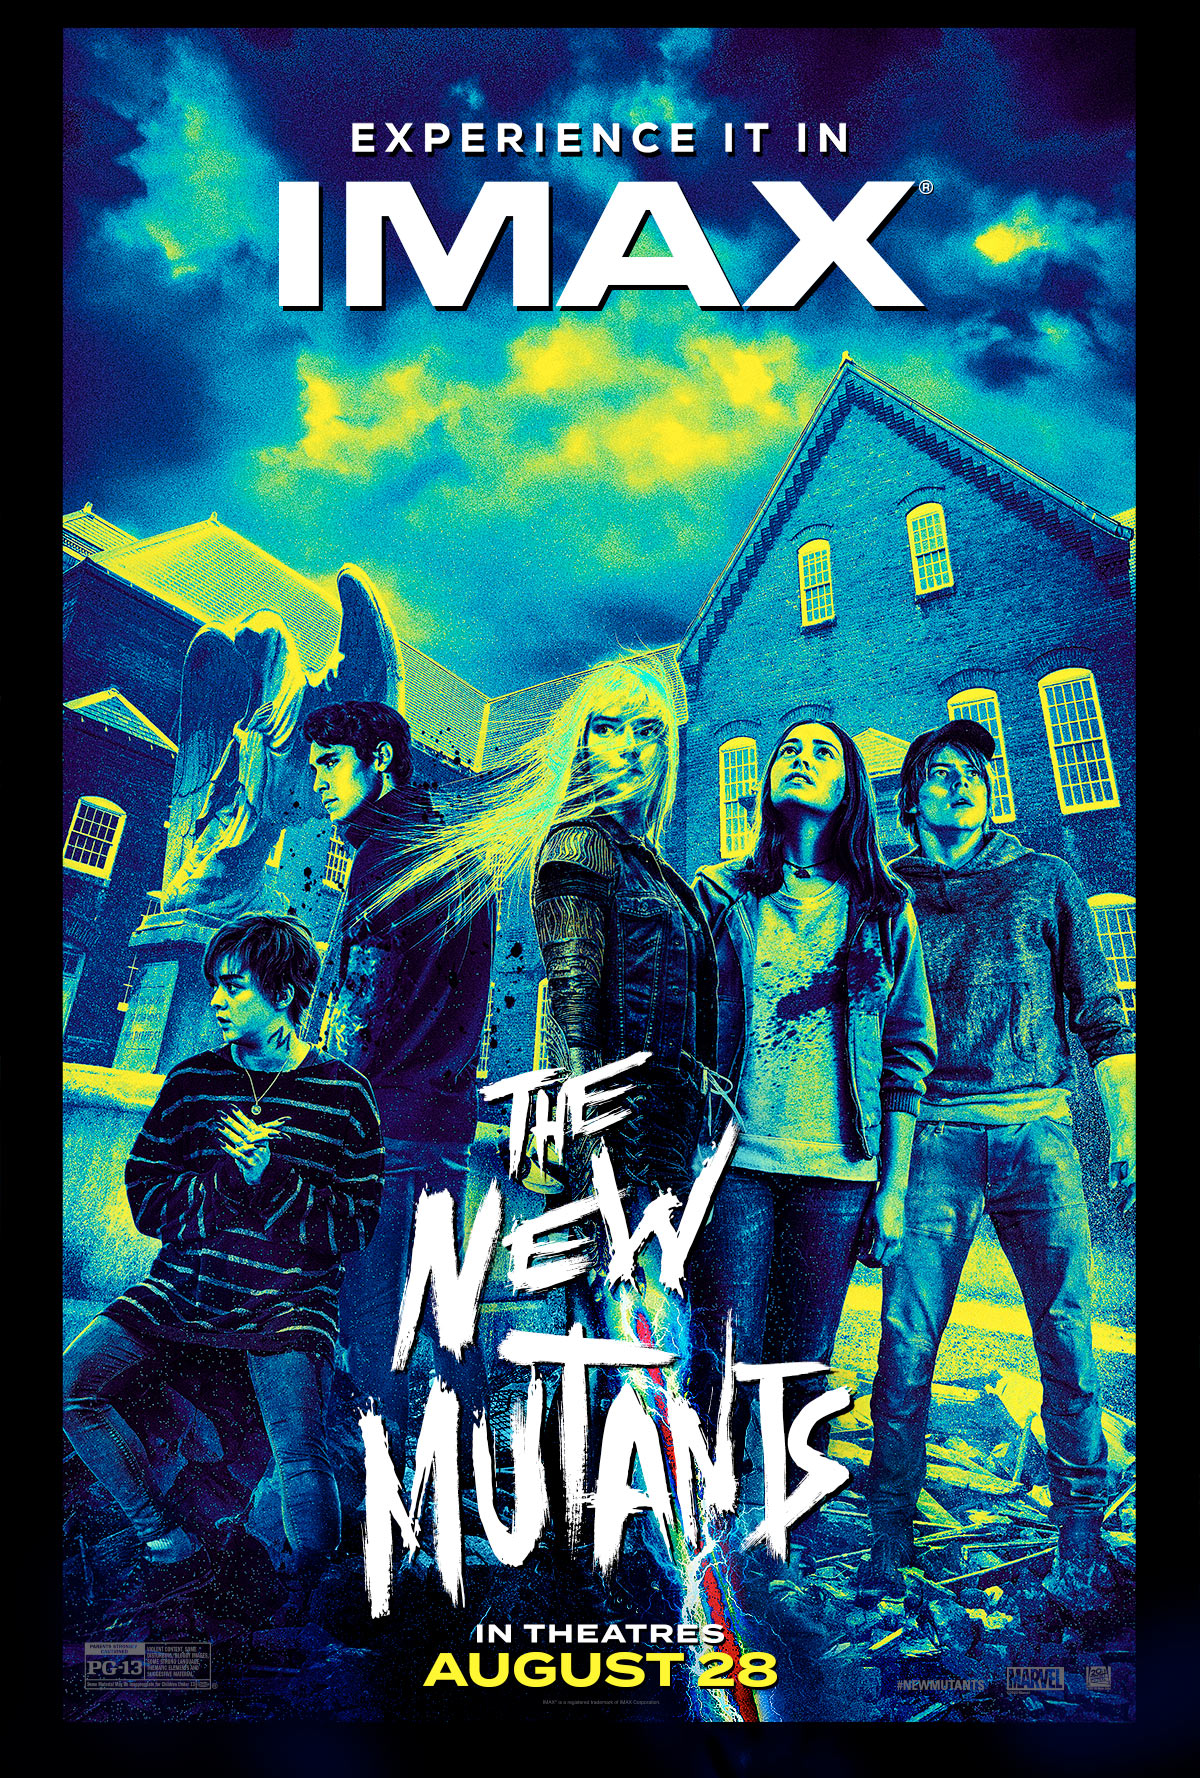 The New Mutants TV Spots Highlight Main Cast's Powers & Fears